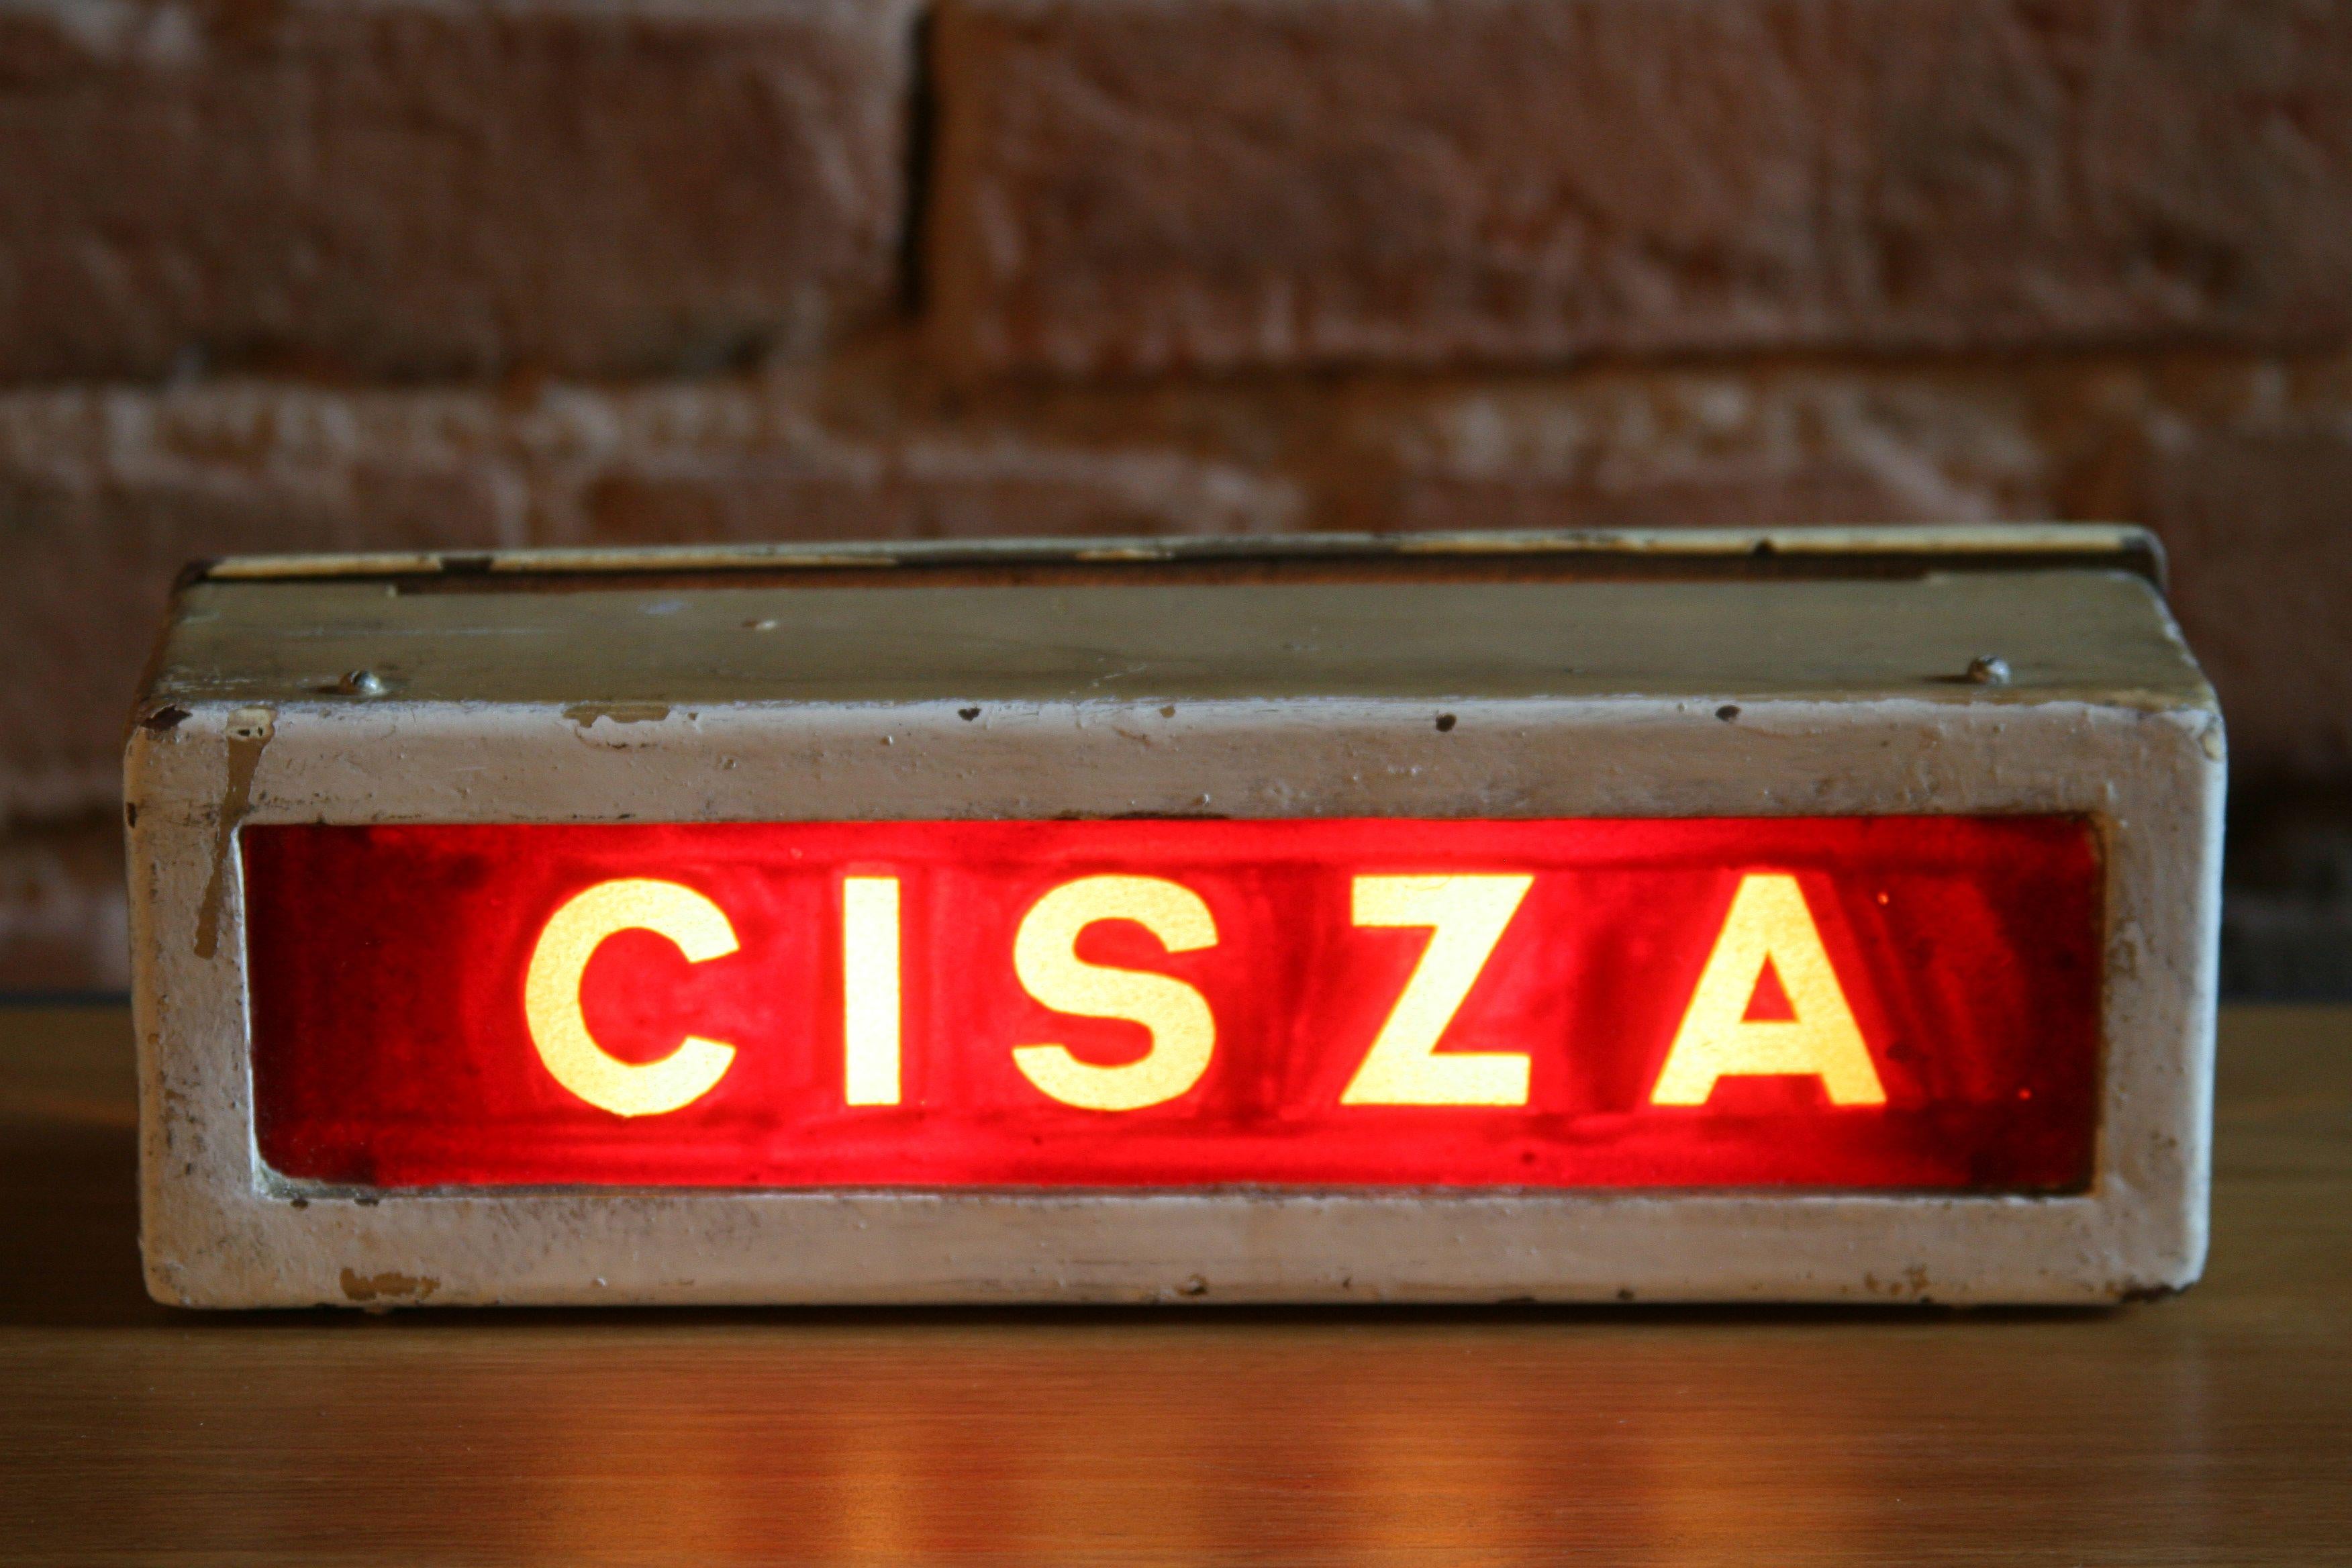 Polish 1950s Illuminated Theater Sign “Cisza”, Meaning “Silence”